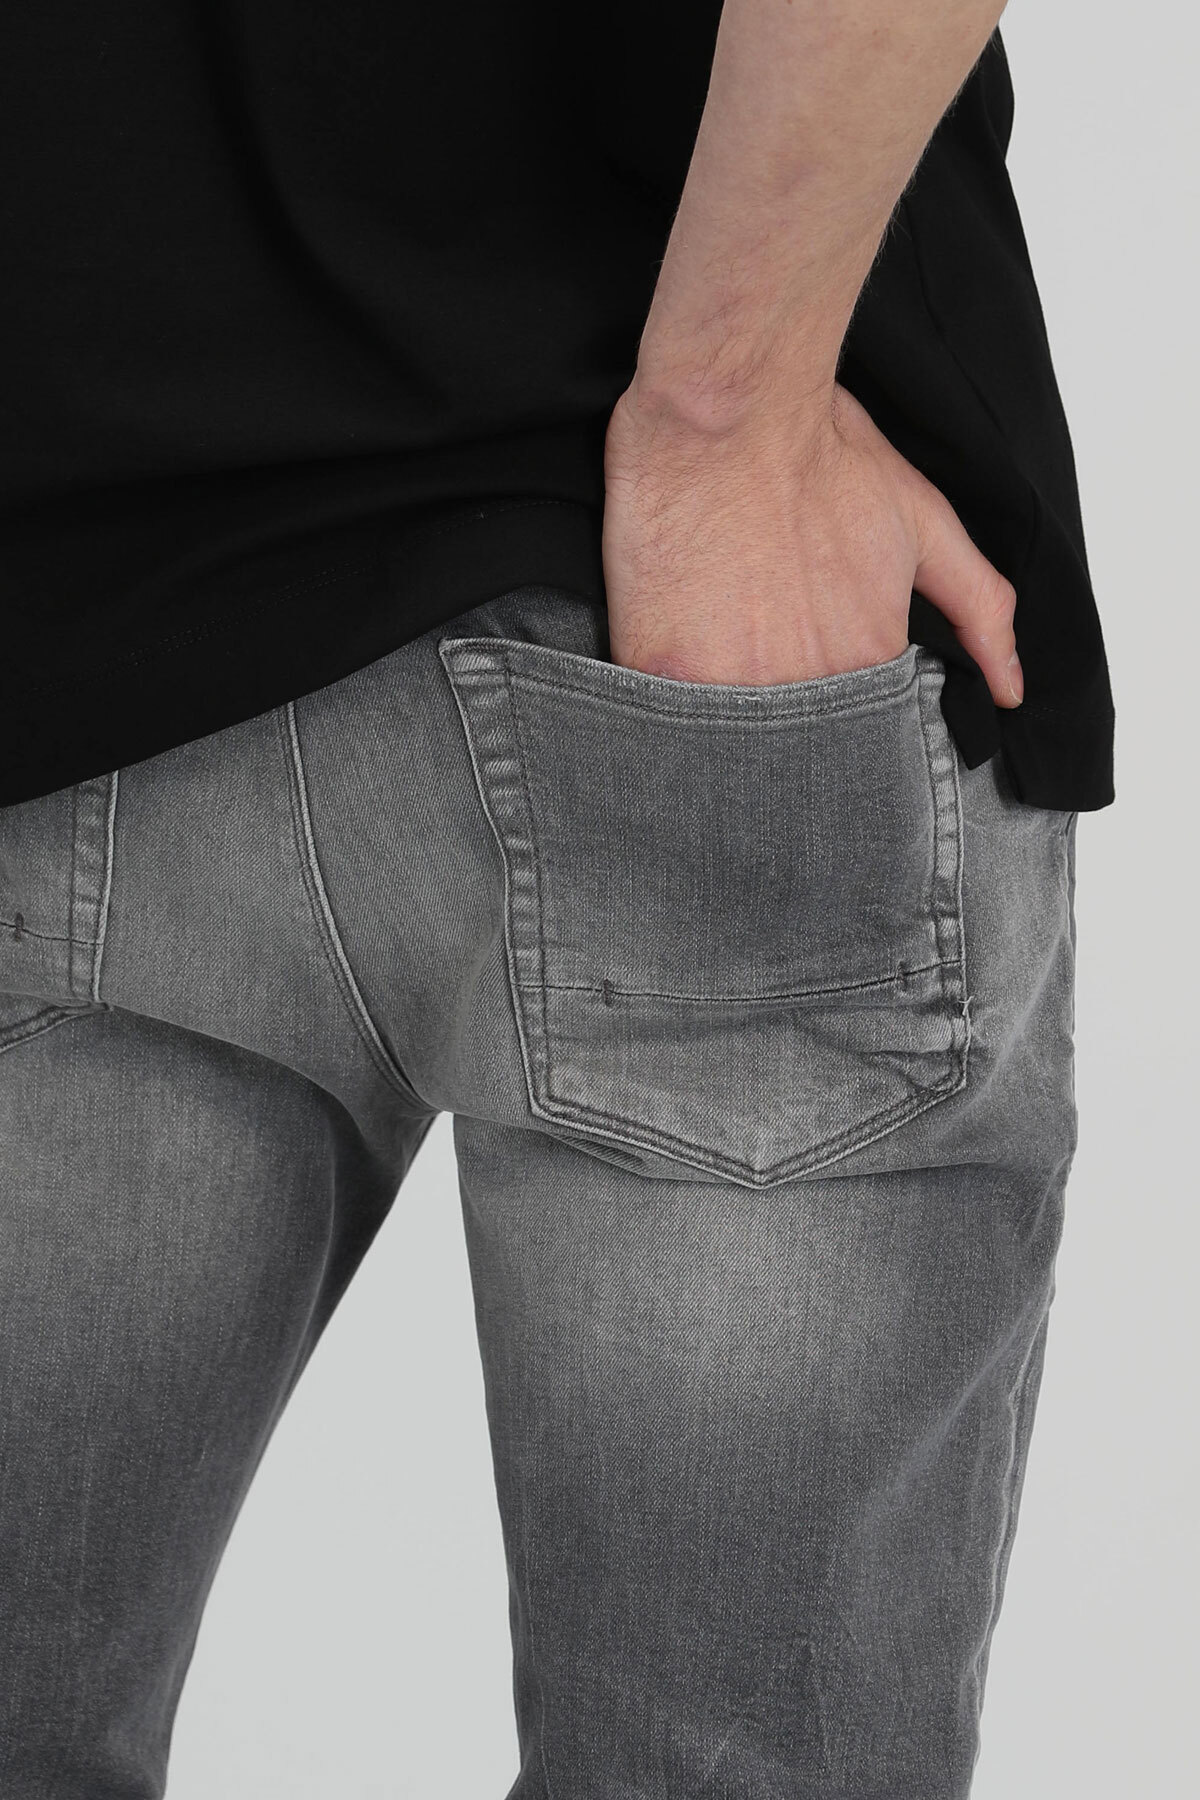 Mauss Smart Jean Erkek Pantolon Slim Fit Açık Gri